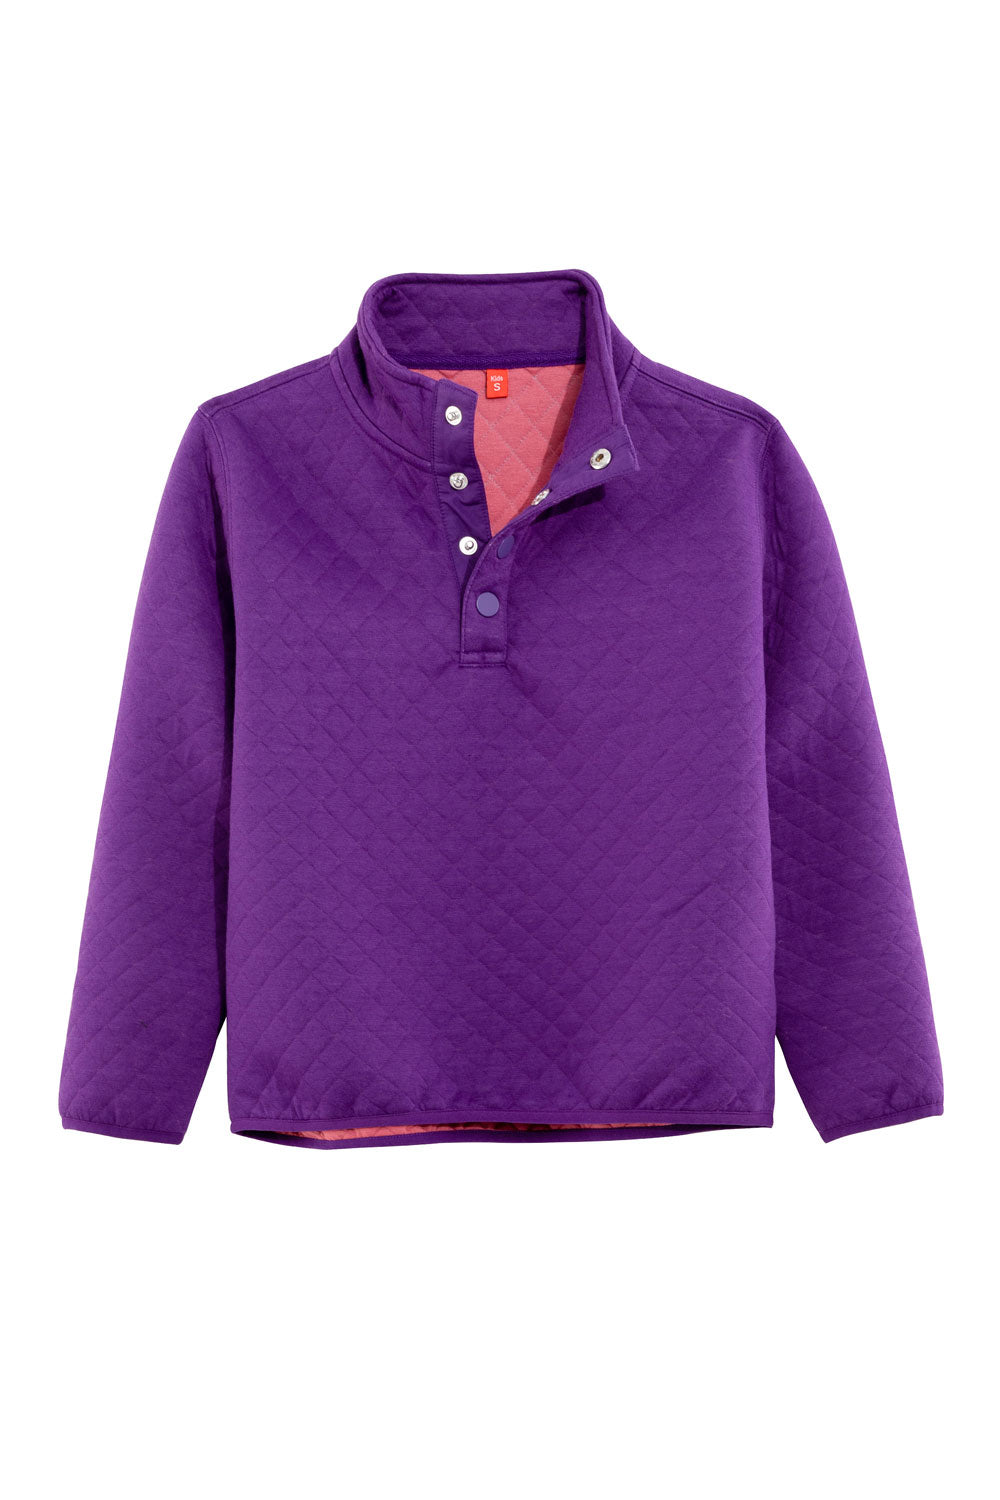 Girls Ultra Soft Quilted 1/4 Snap Fleece Pullover Mountain Outdoor Shirt